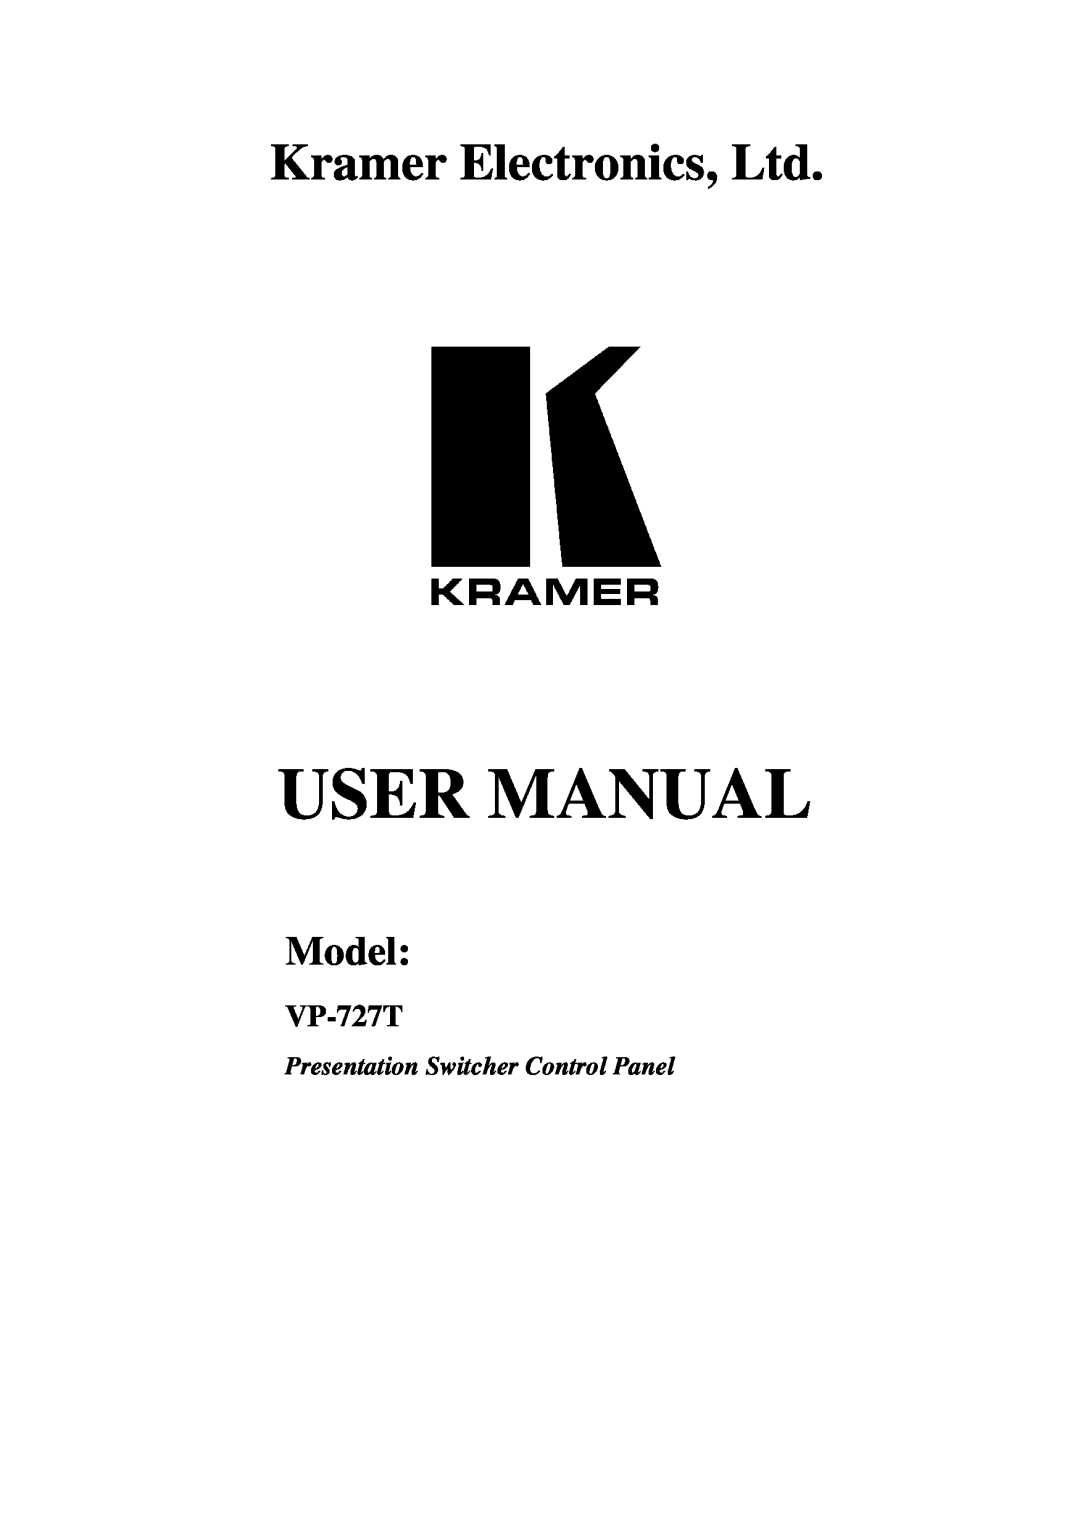 Kramer Electronics VP-727T user manual User Manual, Model, Presentation Switcher Control Panel 